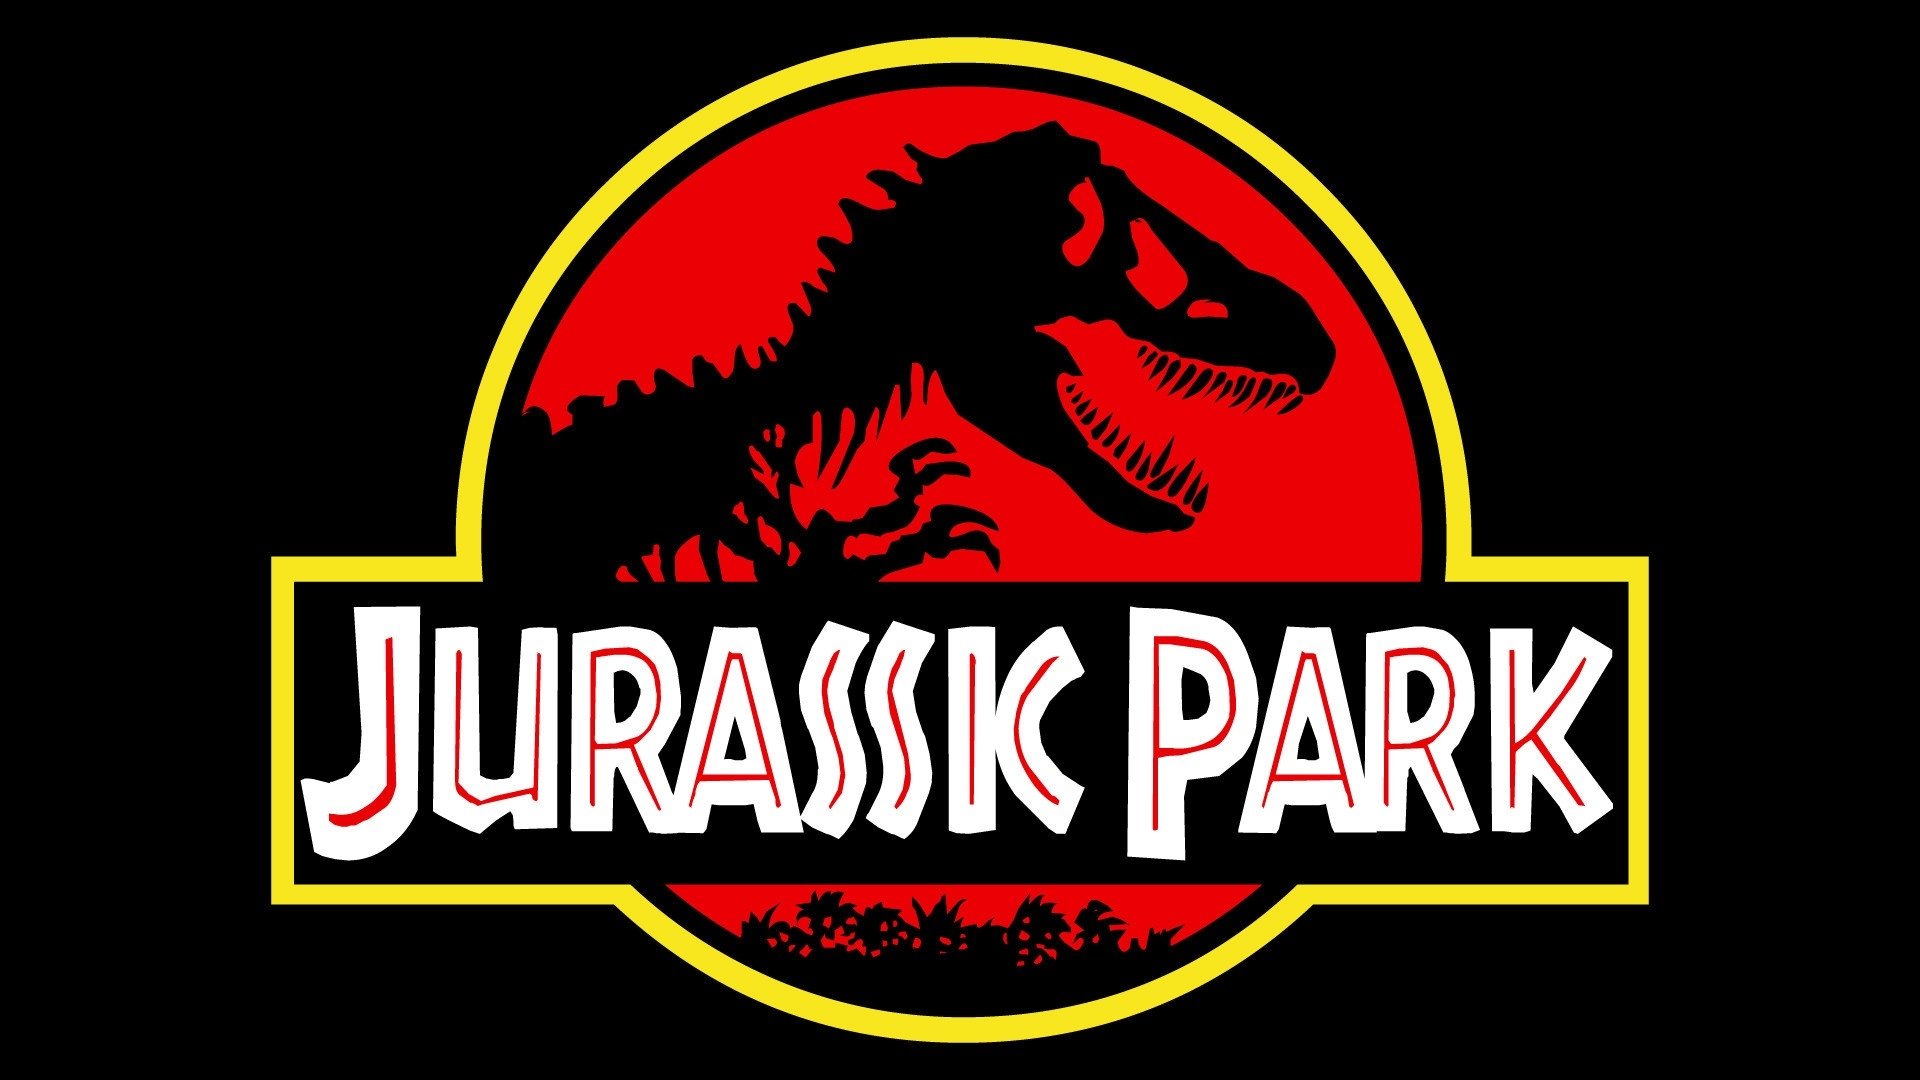 Jurassic Park HD Wallpaper Background Image